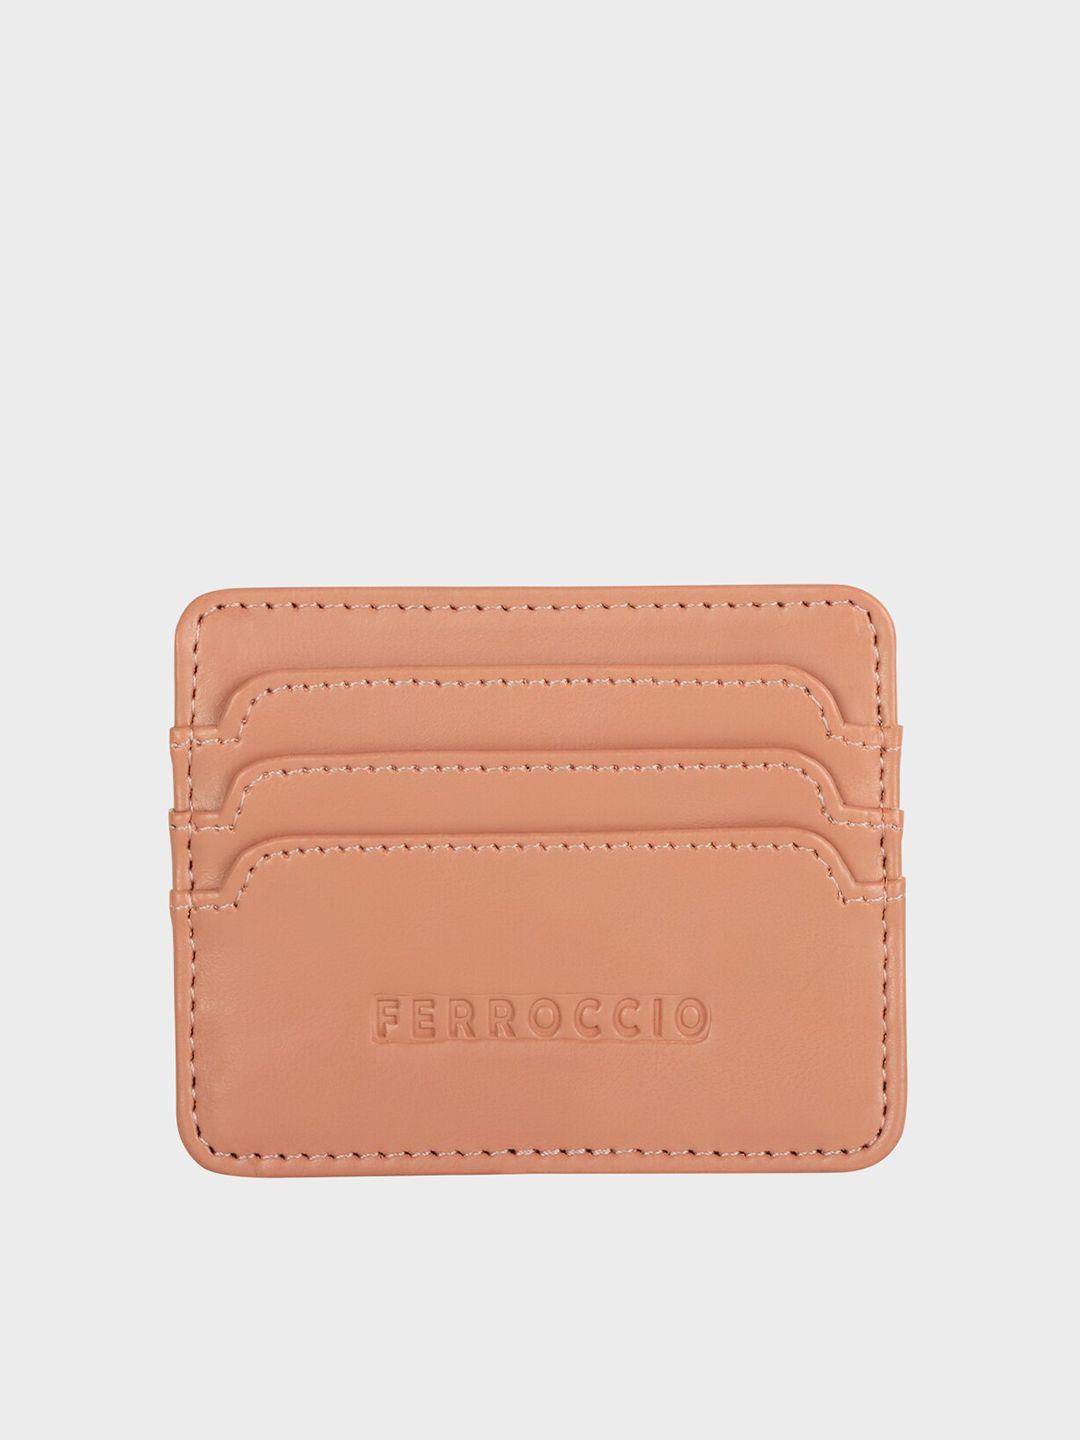 ferroccio women pink card holder